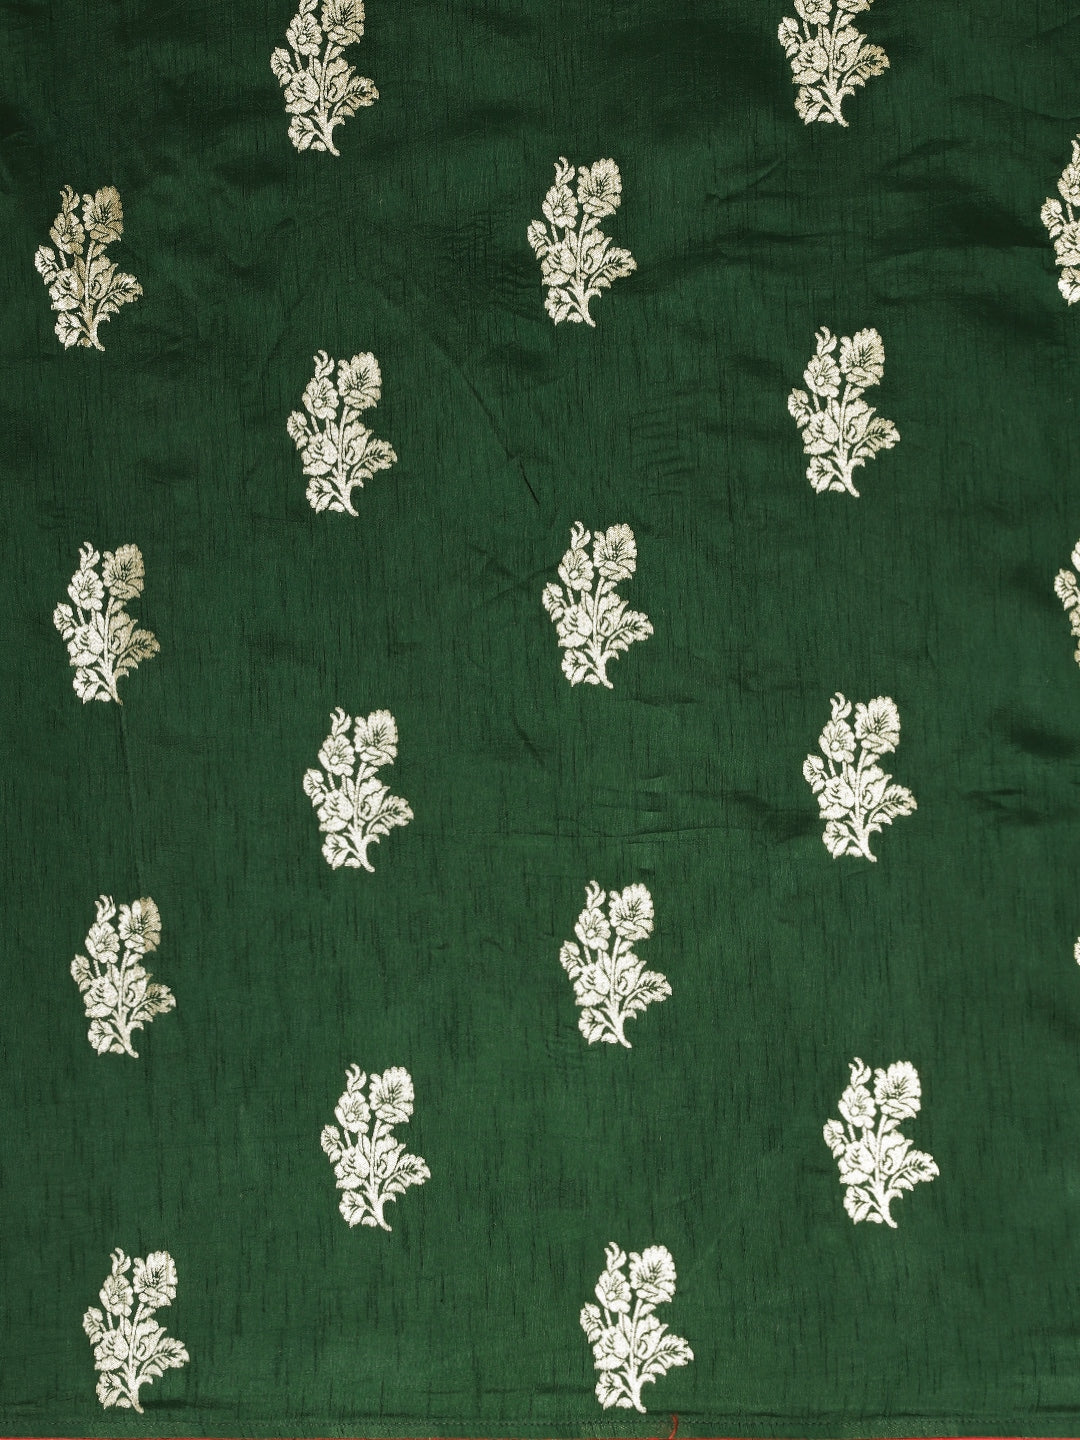 Neeru's Bottle Green Color Banaras Fabric Saree